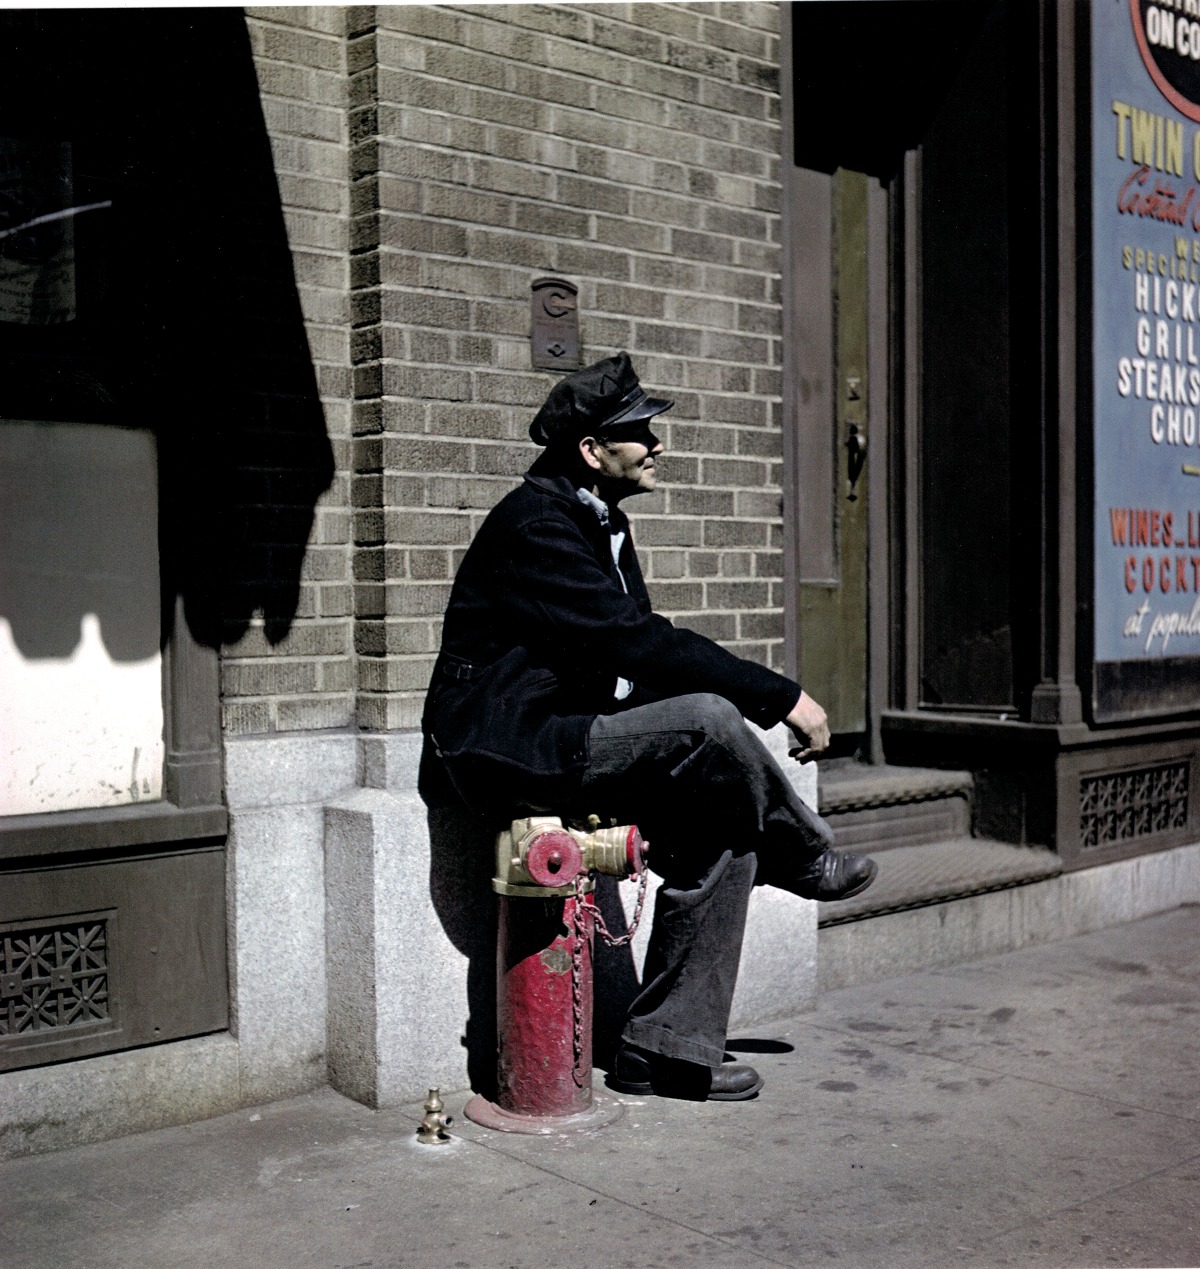 Man on Fire Hydrant, East Harlem, New York, 1947